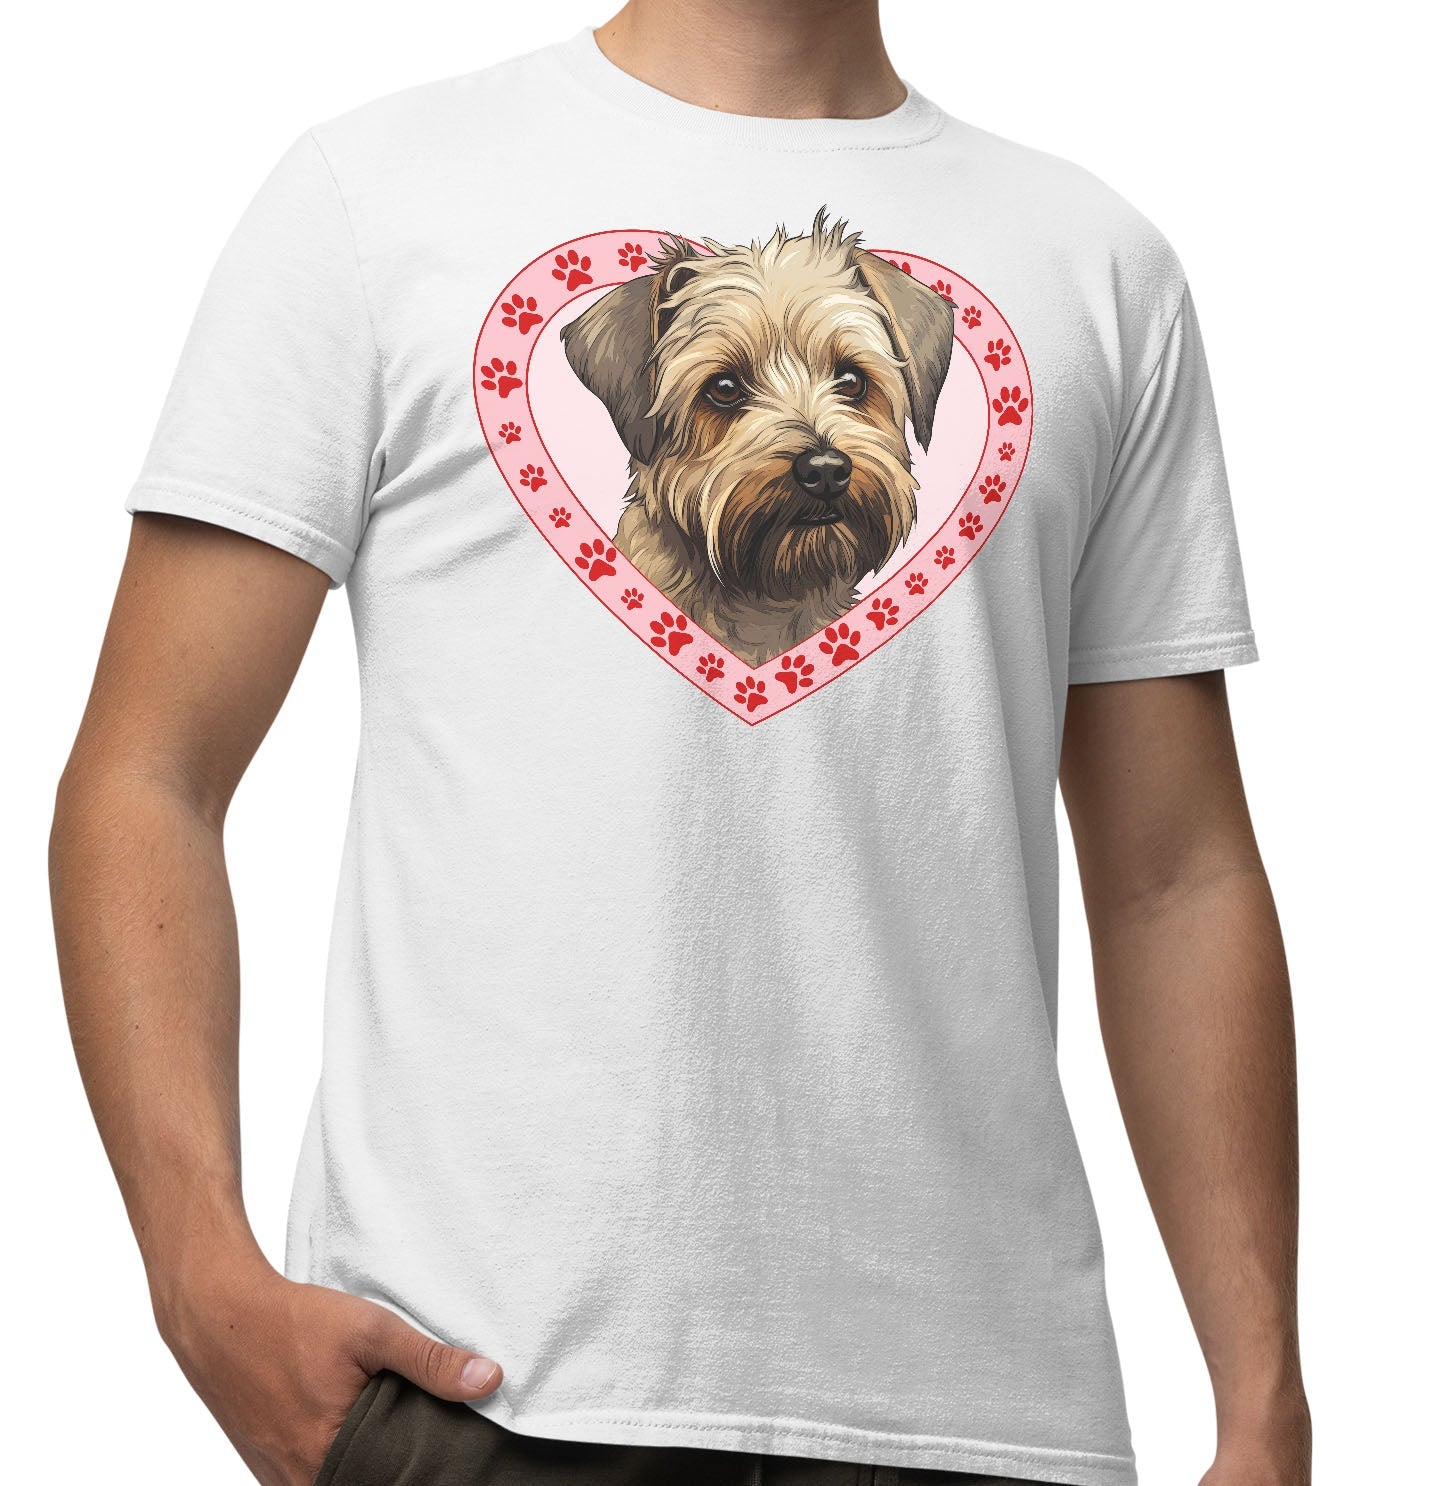 Glen of Imaal Terrier Illustration In Heart - Adult Unisex T-Shirt